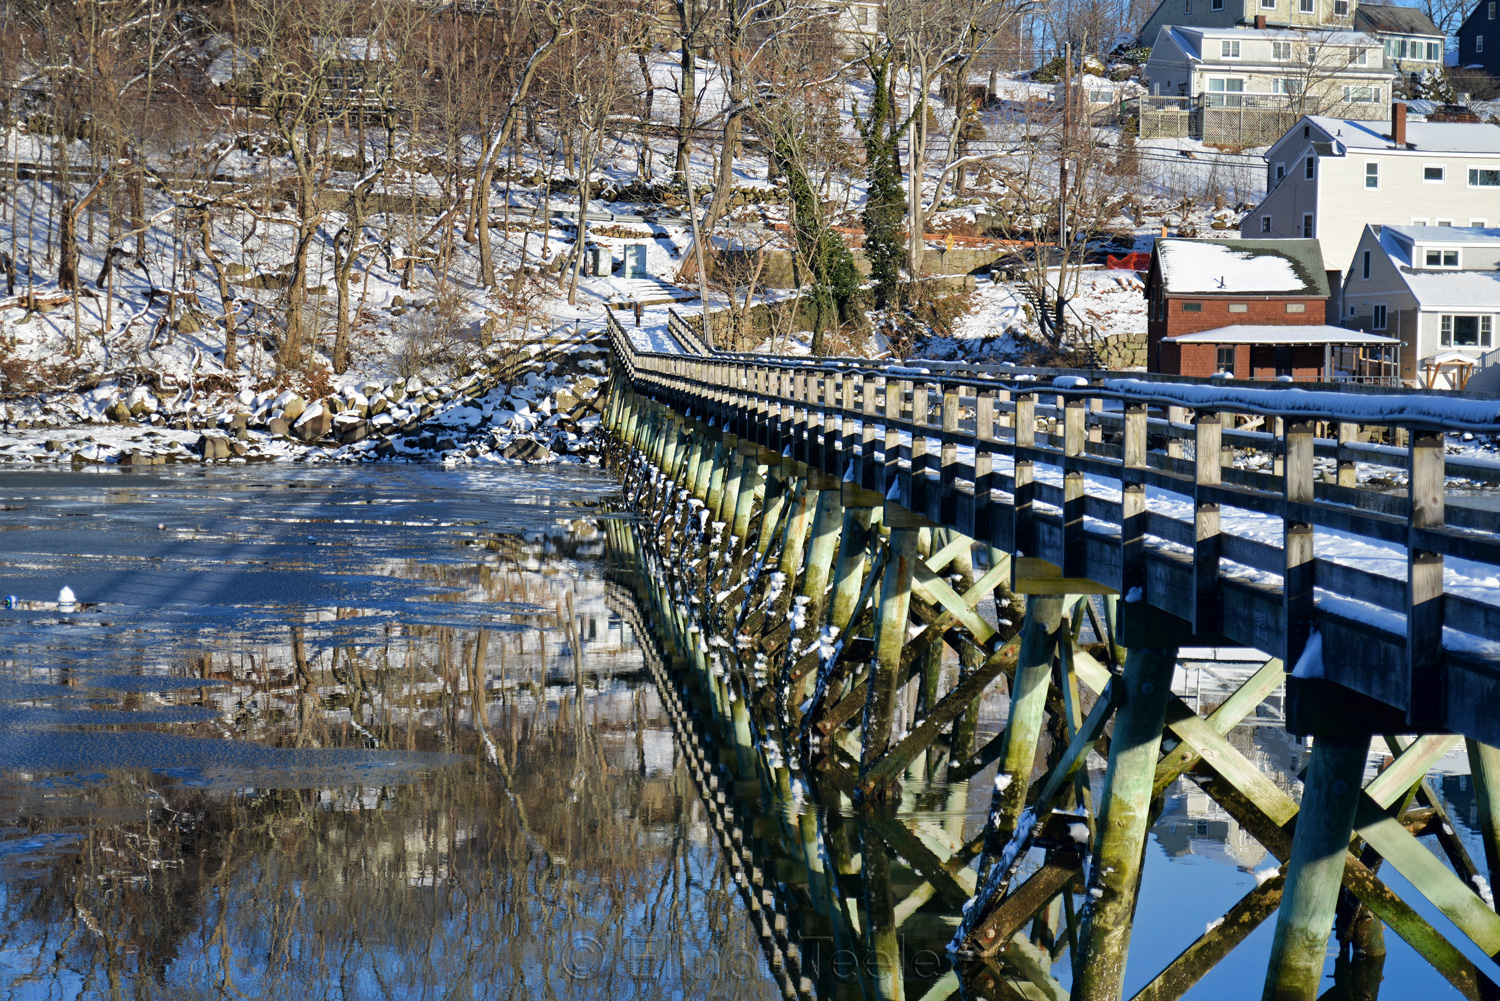 Footbridge - Winter Reflections (Landscape)